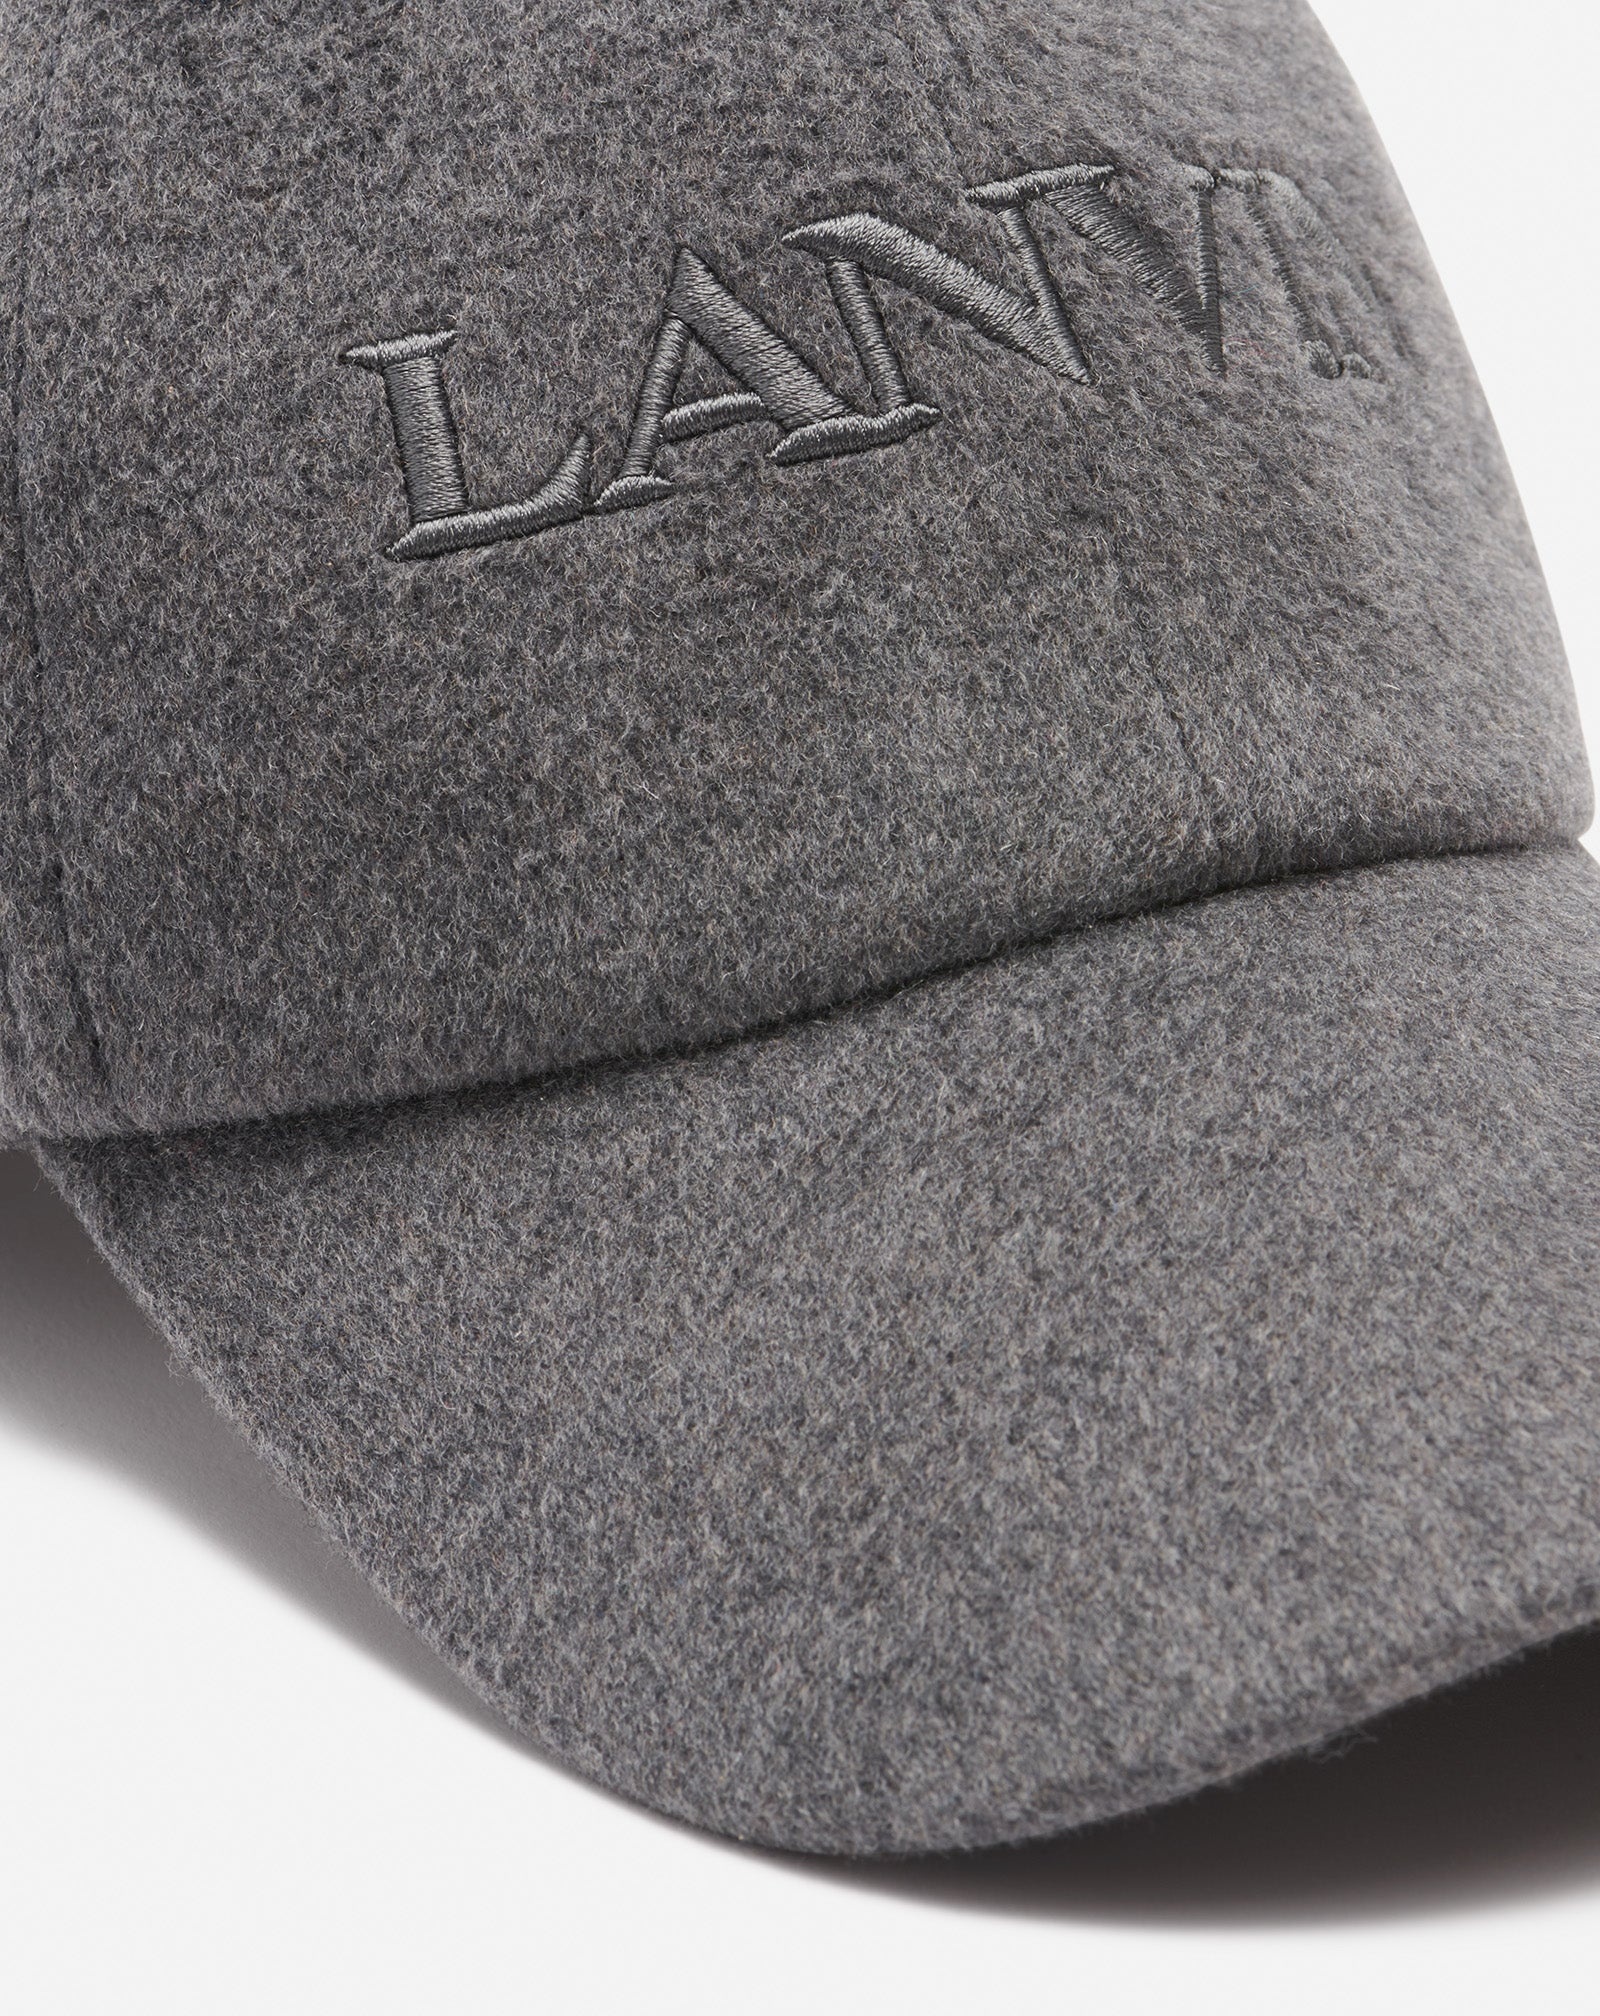 LANVIN WOOL CAP - 3